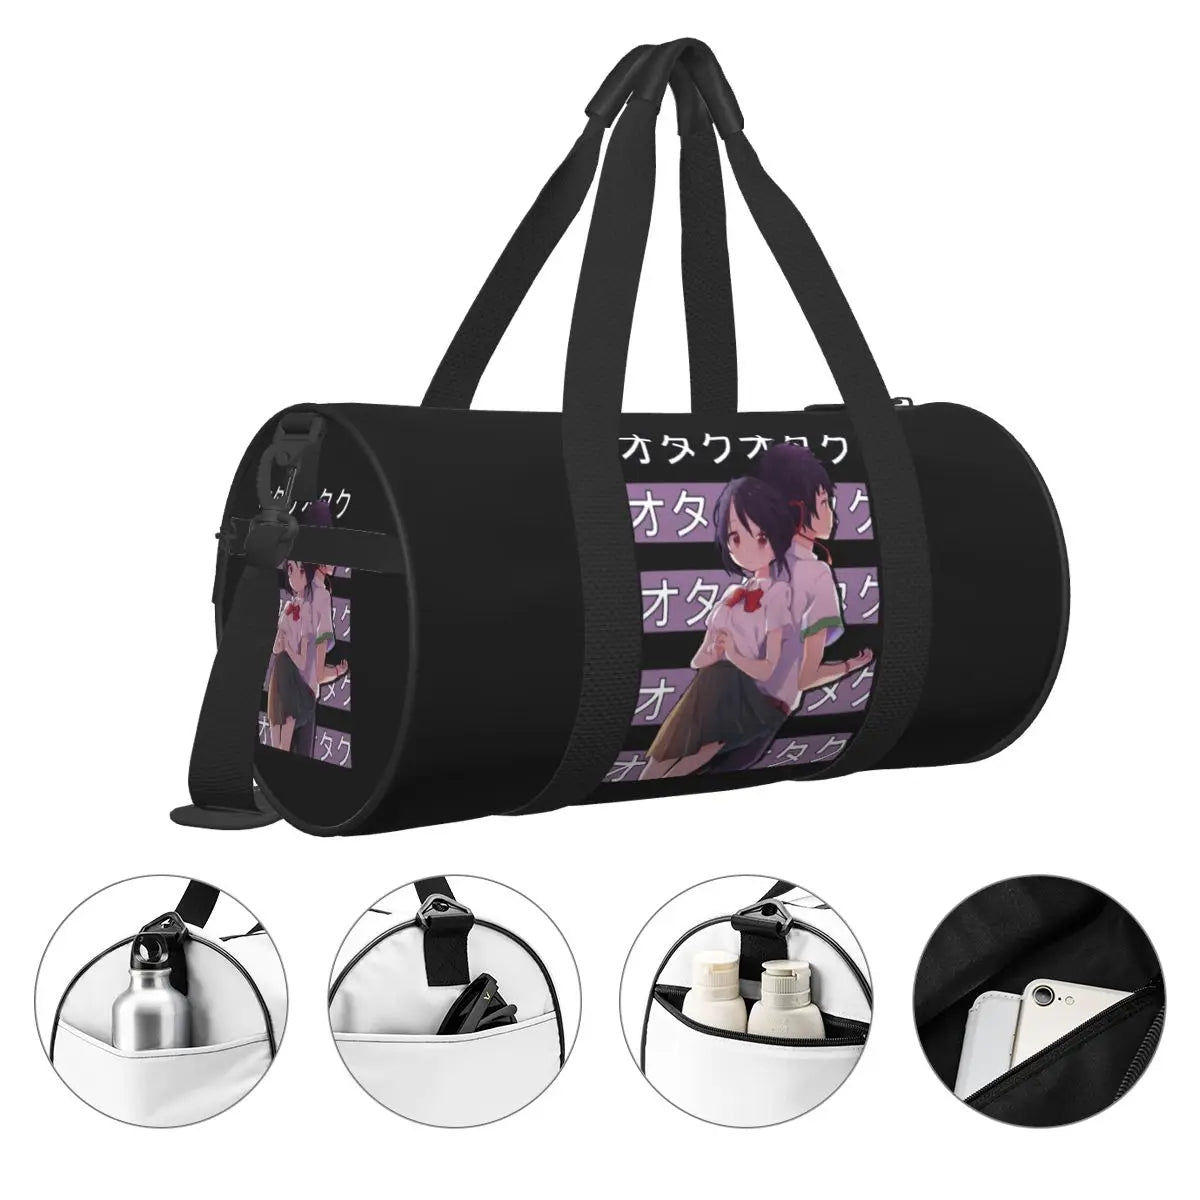 Kimi No Nawa Anime Duffle Bag